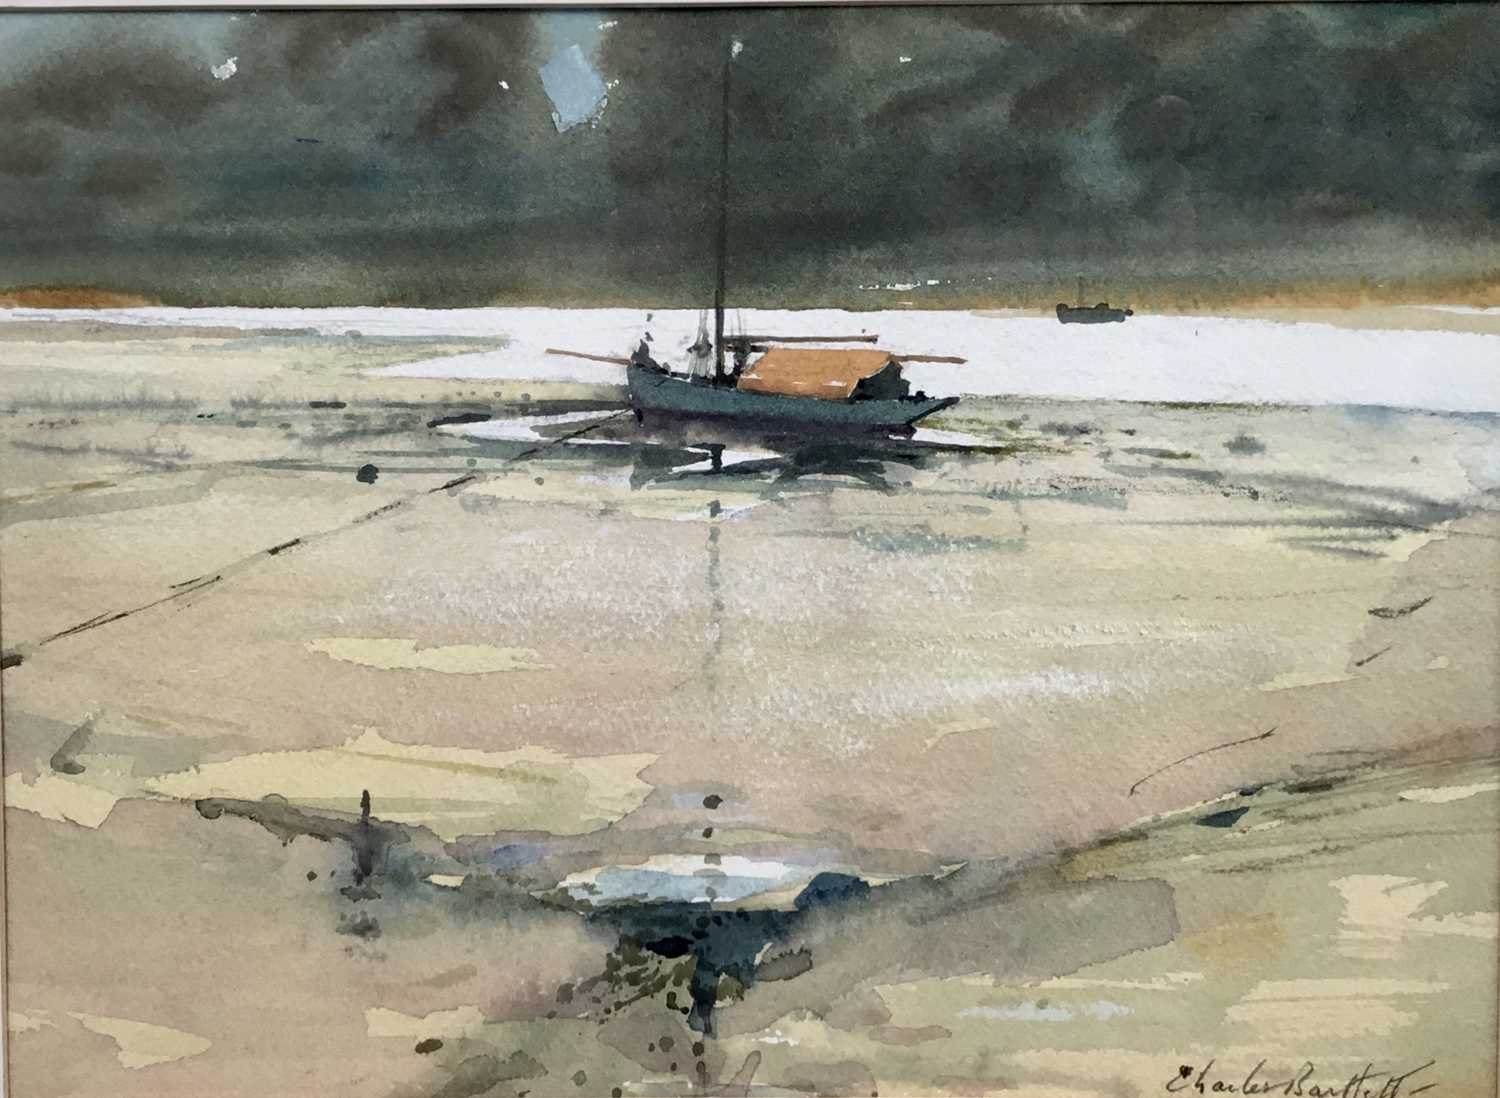 Lot 61 - Charles Bartlett (1921-2014), watercolour - Waiting the Tide, signed, 25cm x 34cm, in glazed frame